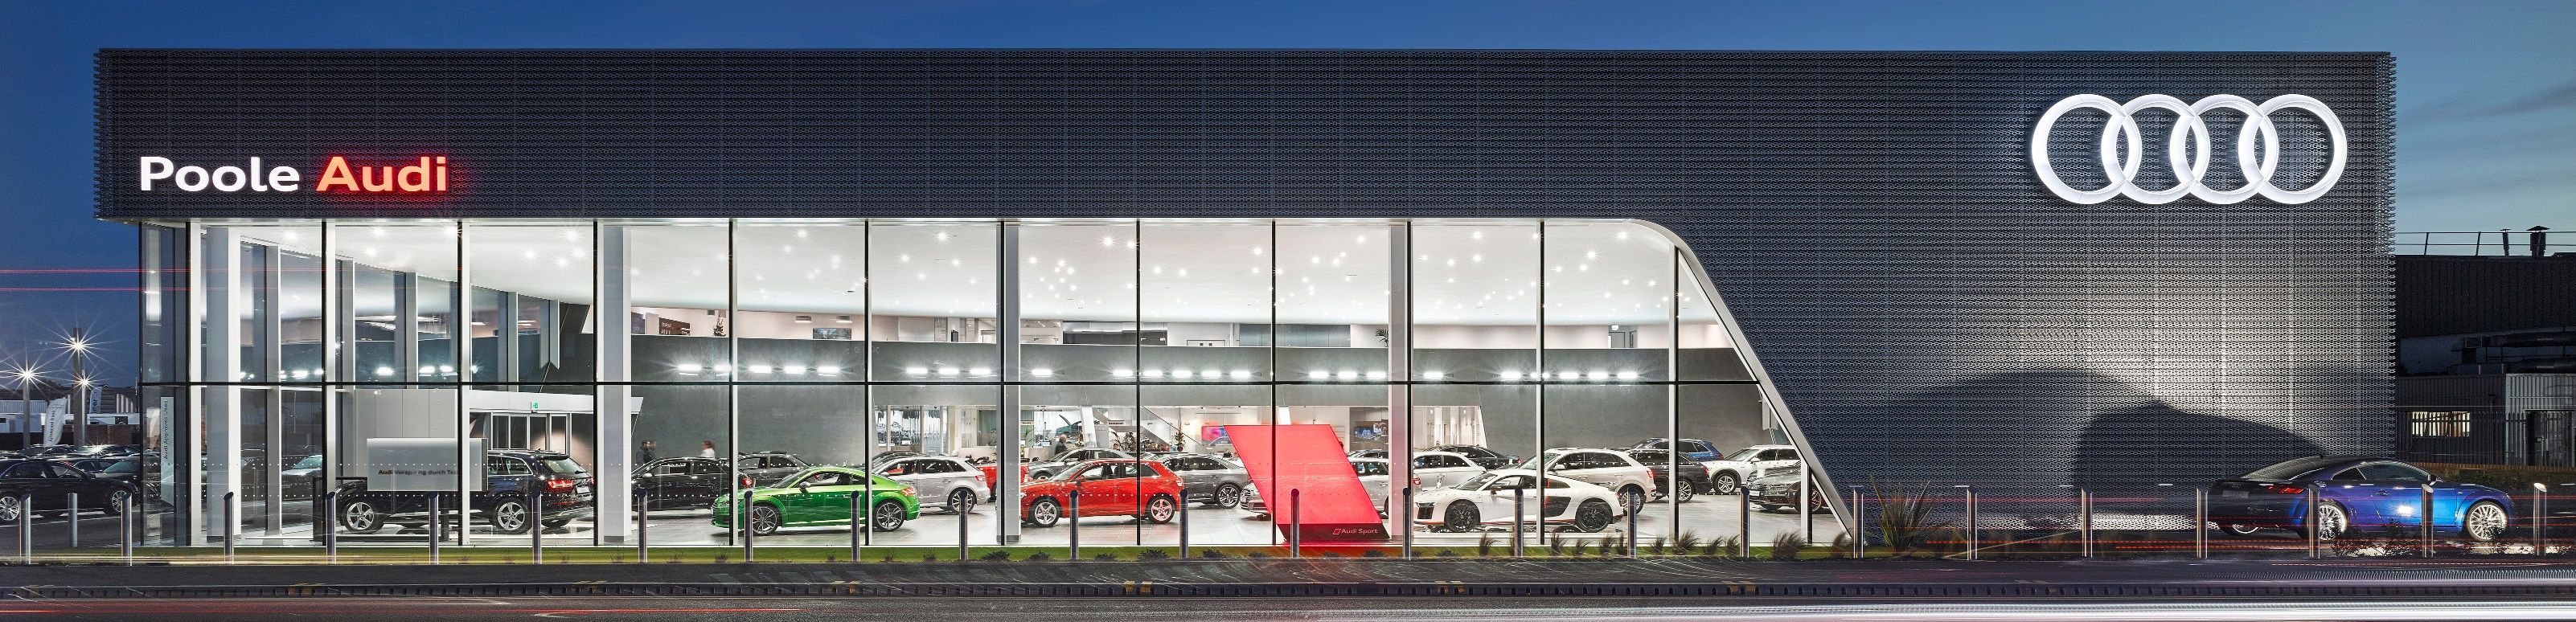 Car Finance at Poole Audi